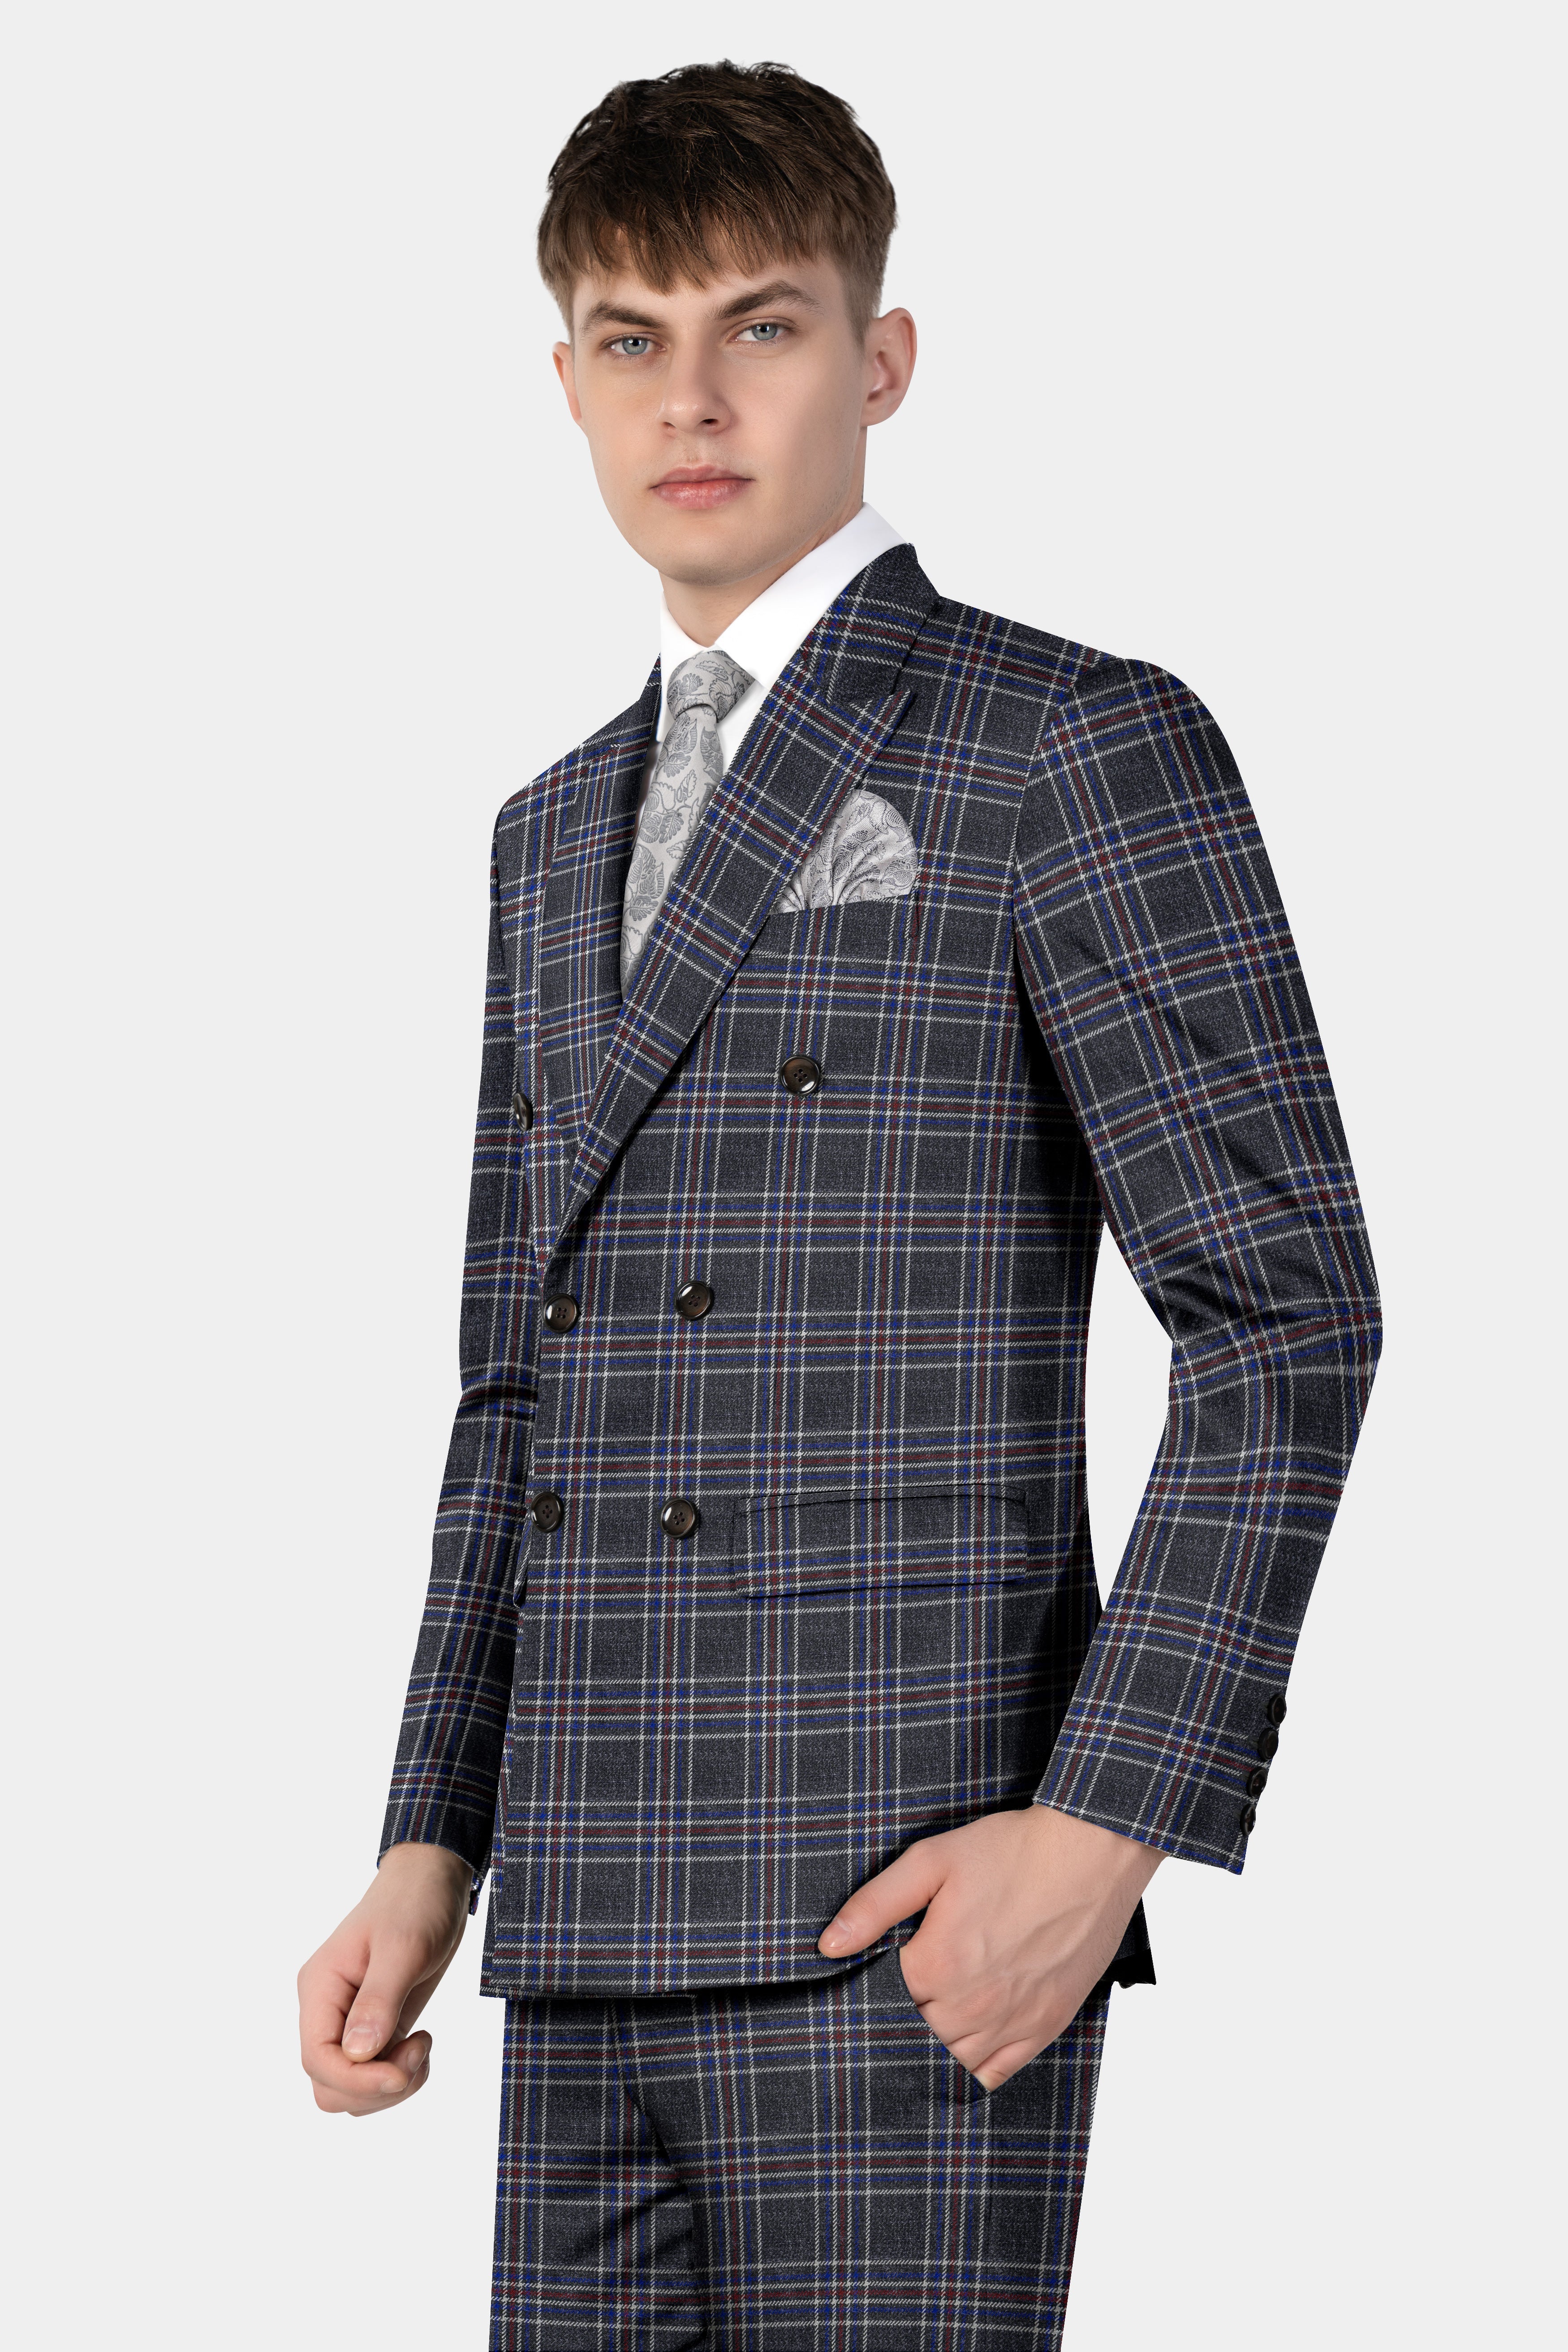 Tuatara Gray Multicolour Plaid Double Breasted Tweed Suit